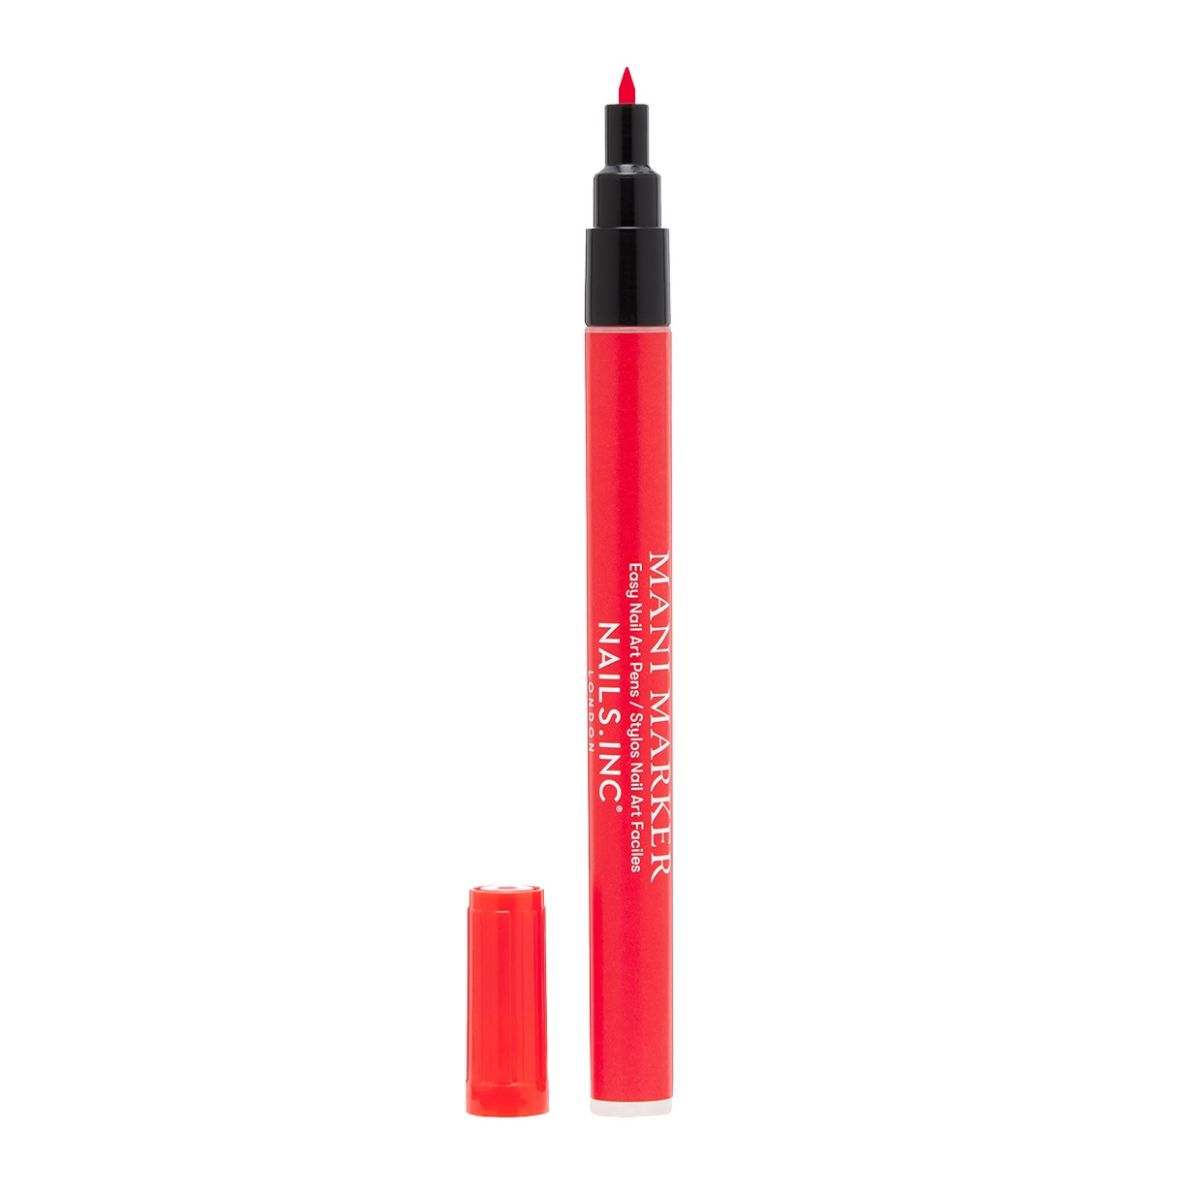 Nails Inc Lipstick Red Mani Marker Nail Art Pen